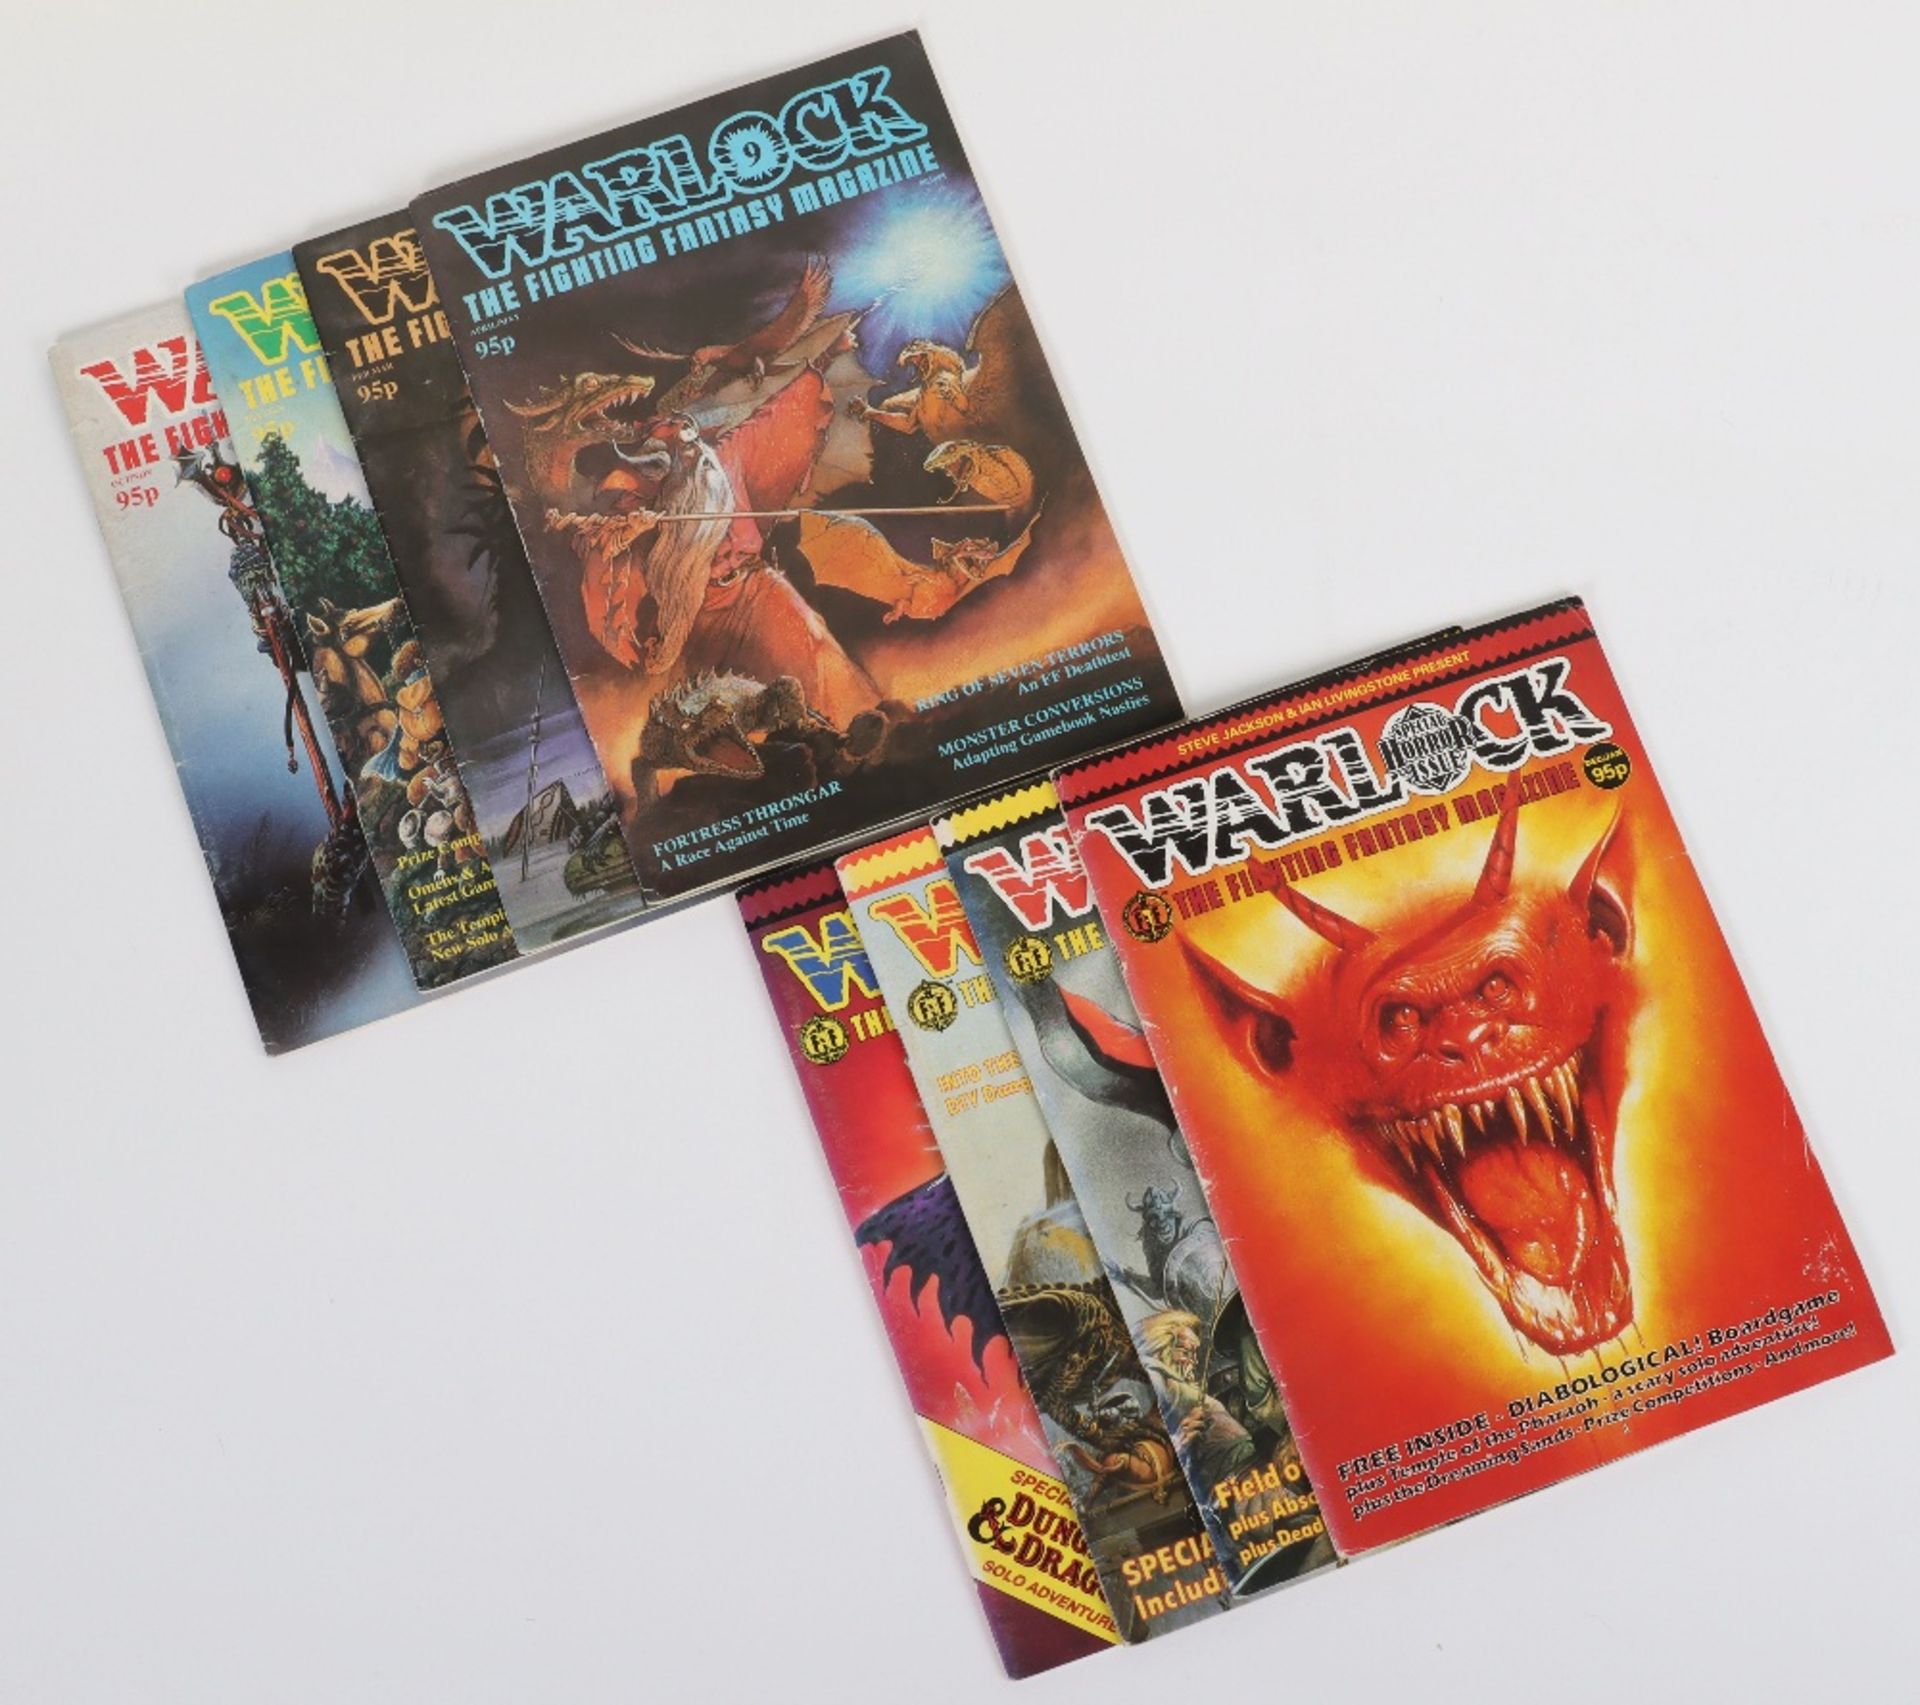 1983 Games workshop “talisman” Game & Warlock magazines - Image 3 of 3